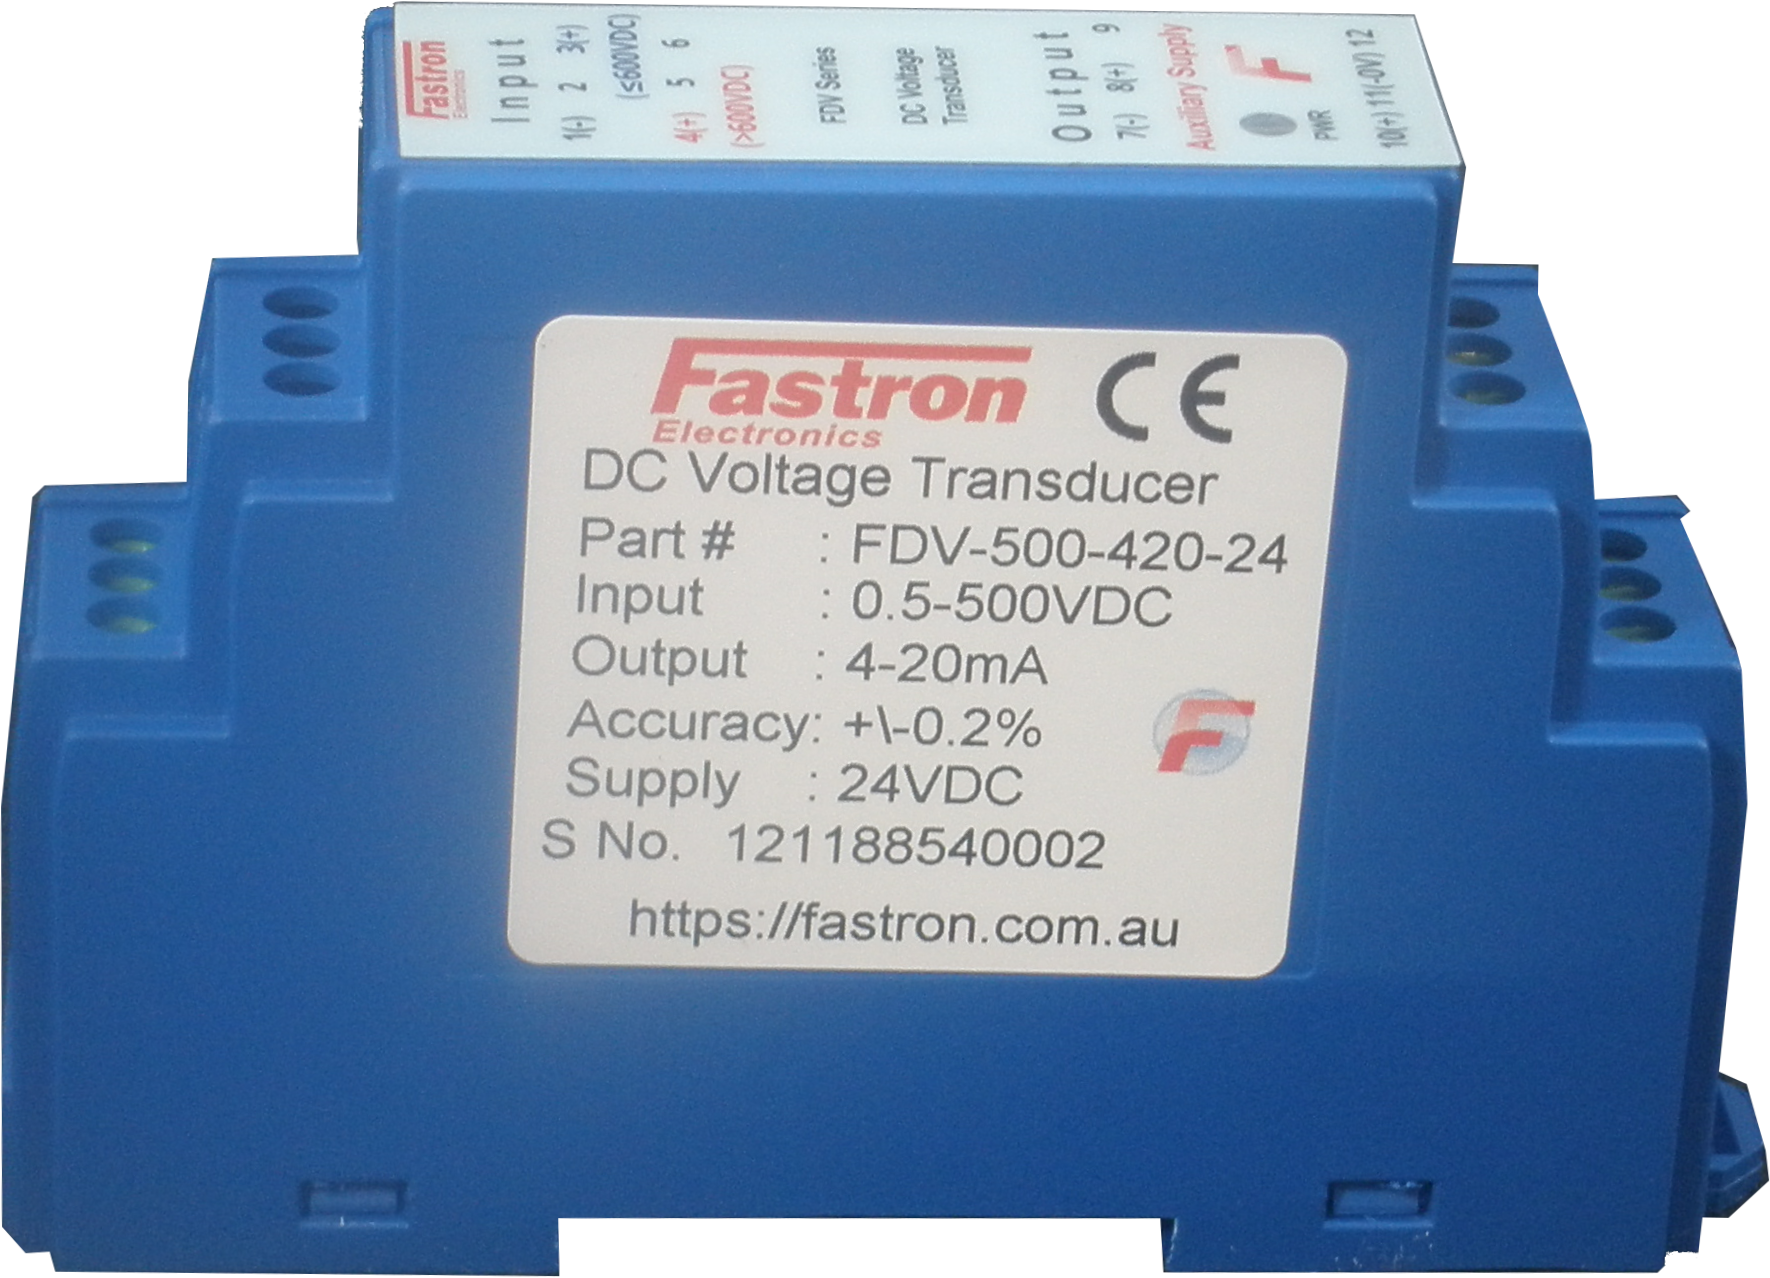 FDV-24-420-24, DC Voltage Transducer, Din Rail Mount, 0-24VDC, 4-20mA output, 24VDC Supply Voltage, 150mS Response